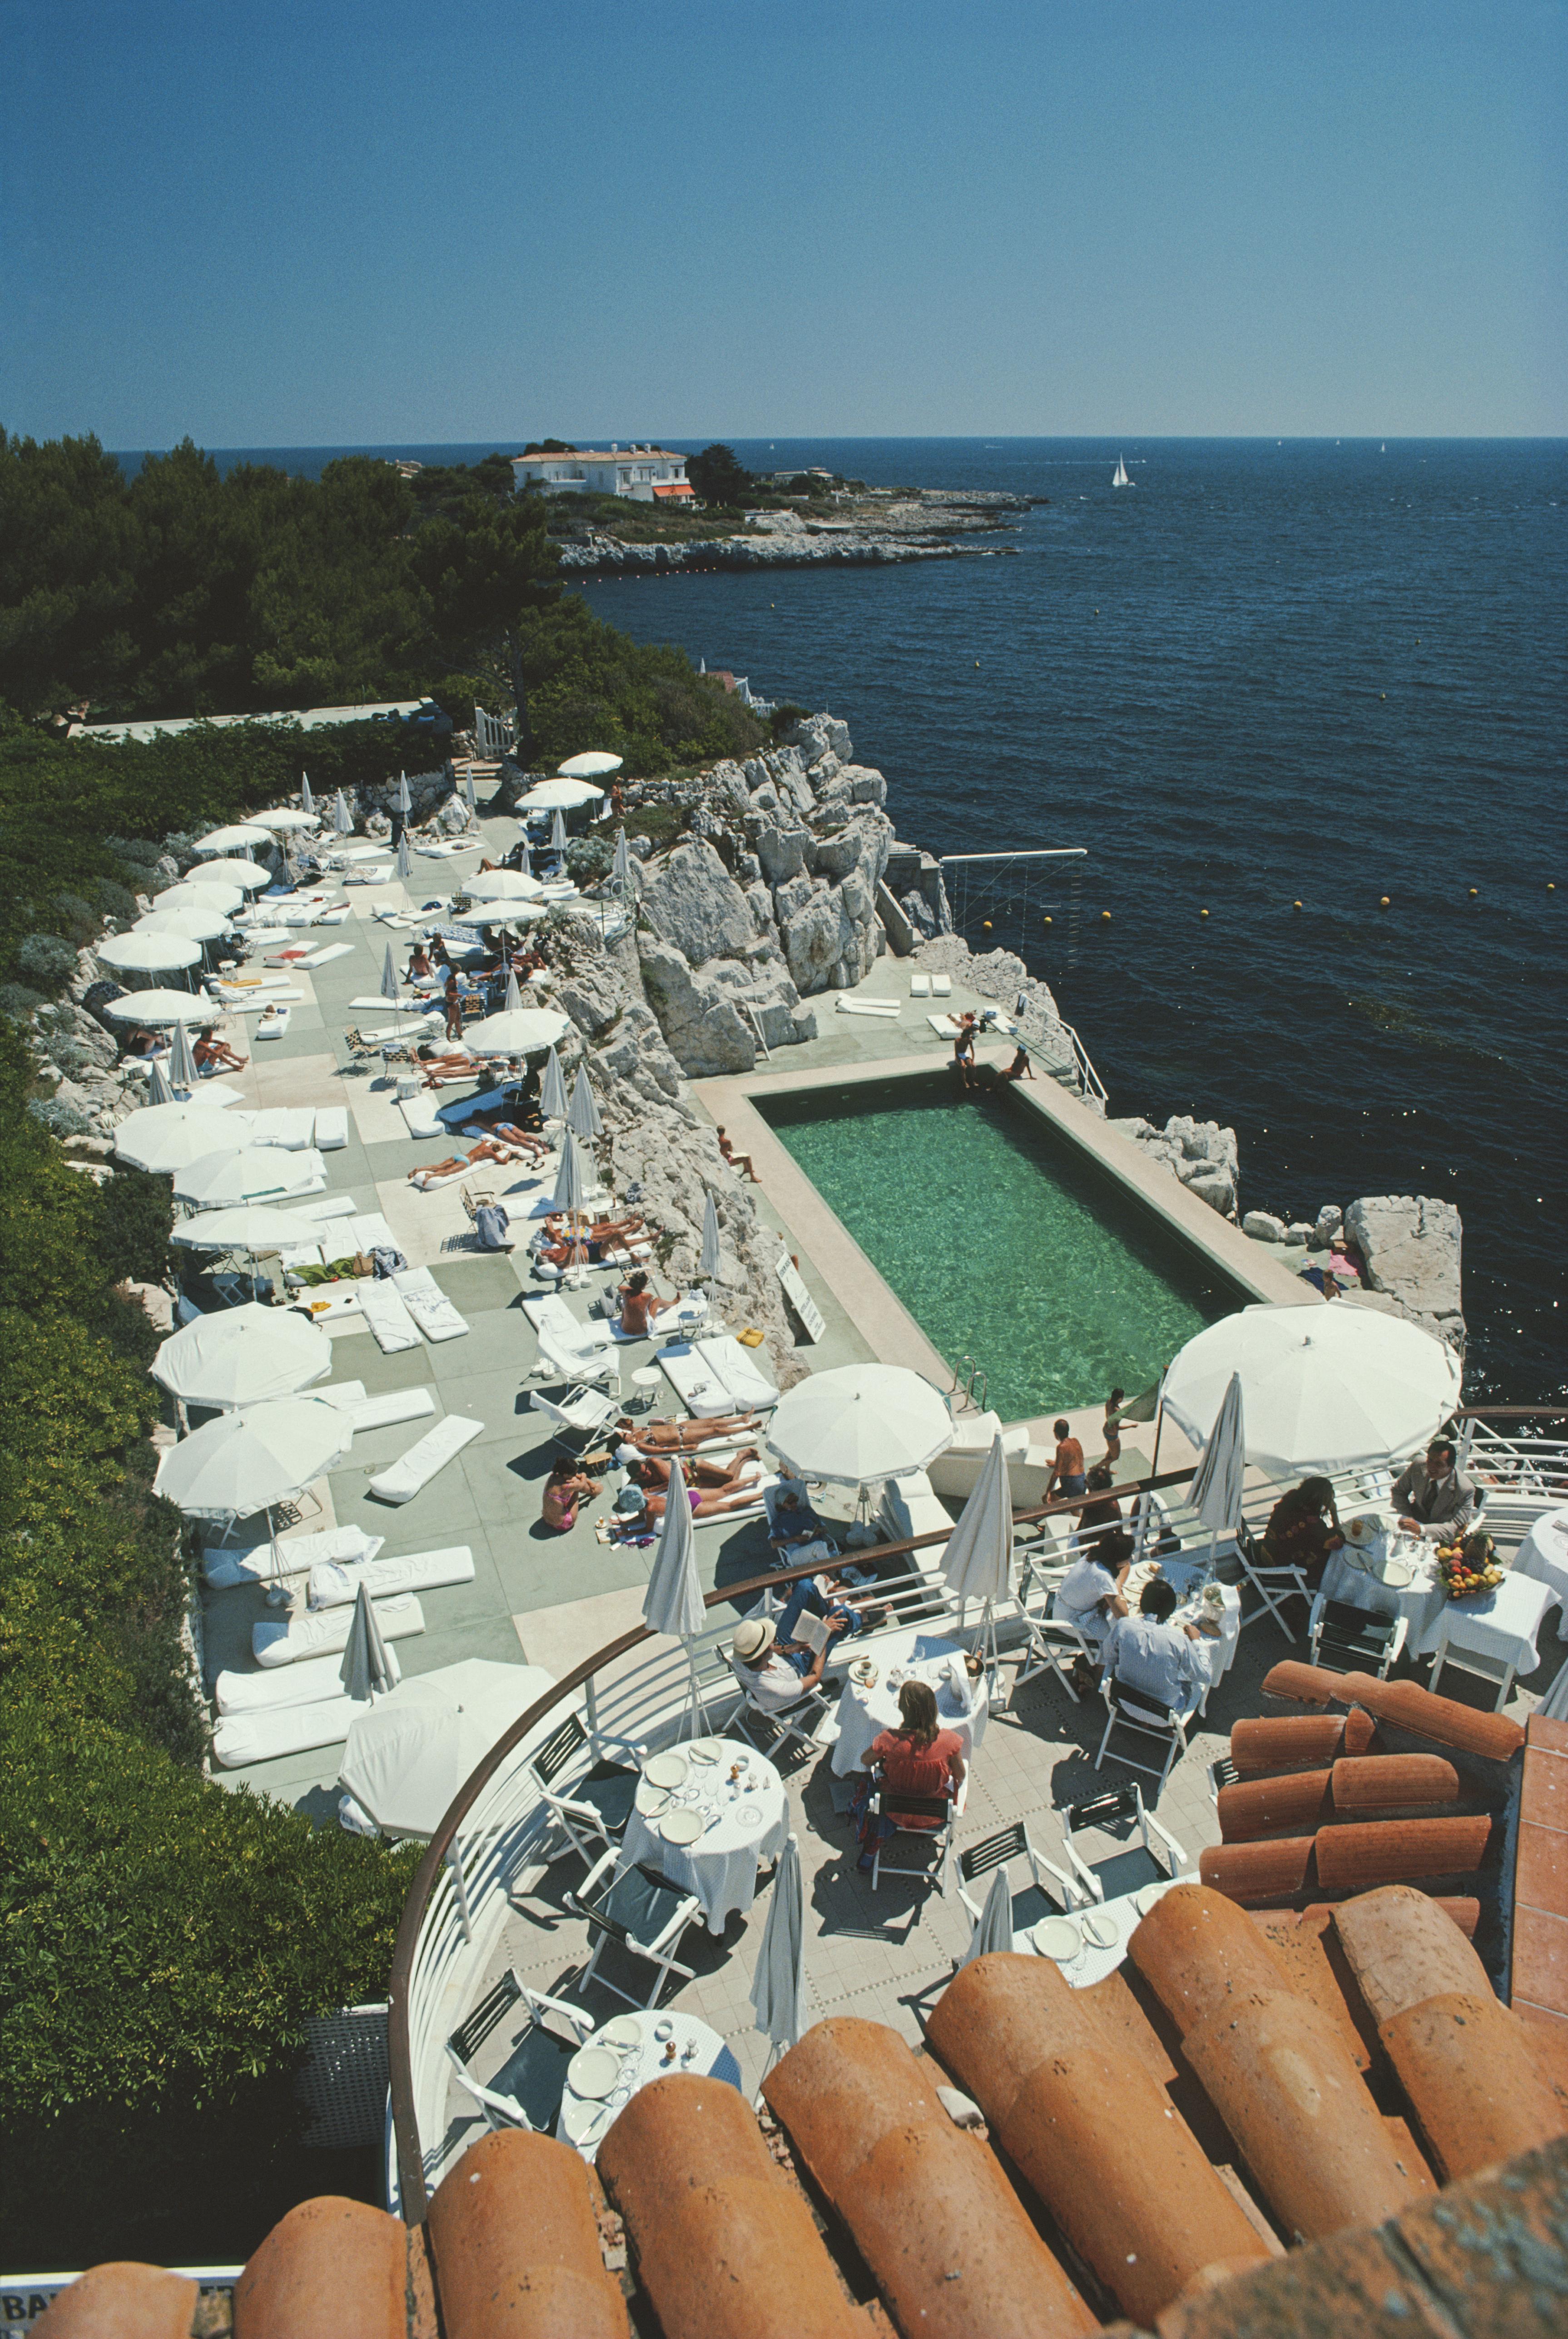 Slim Aarons Landscape Photograph - Hotel du Cap Eden-Roc, Estate Edition Photograph (Poolside in Antibes)